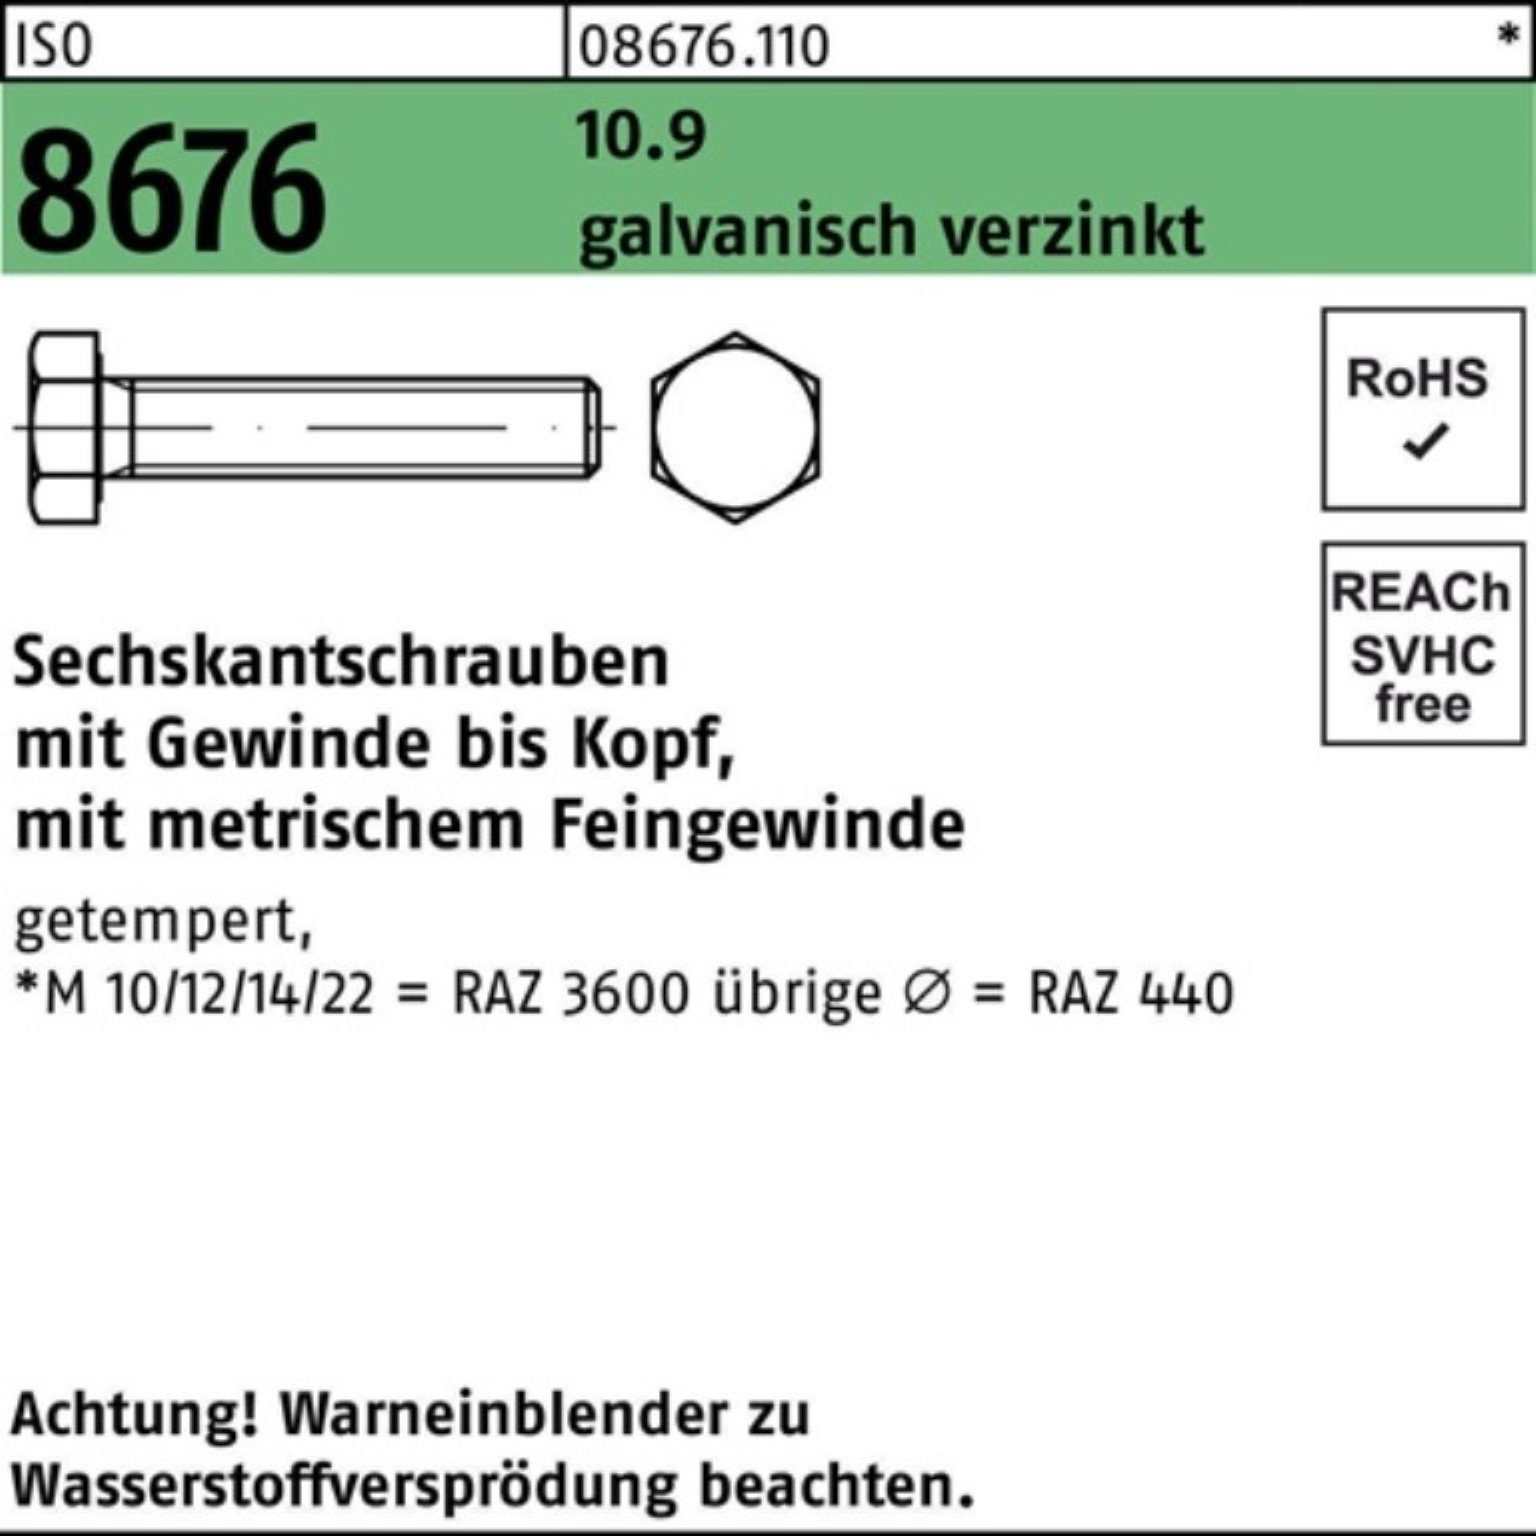 Sechskantschraube 5 30 VG Reyher M16x1,5x 8676 galv.verz. 10.9 Sechskantschraube Pack ISO 100er